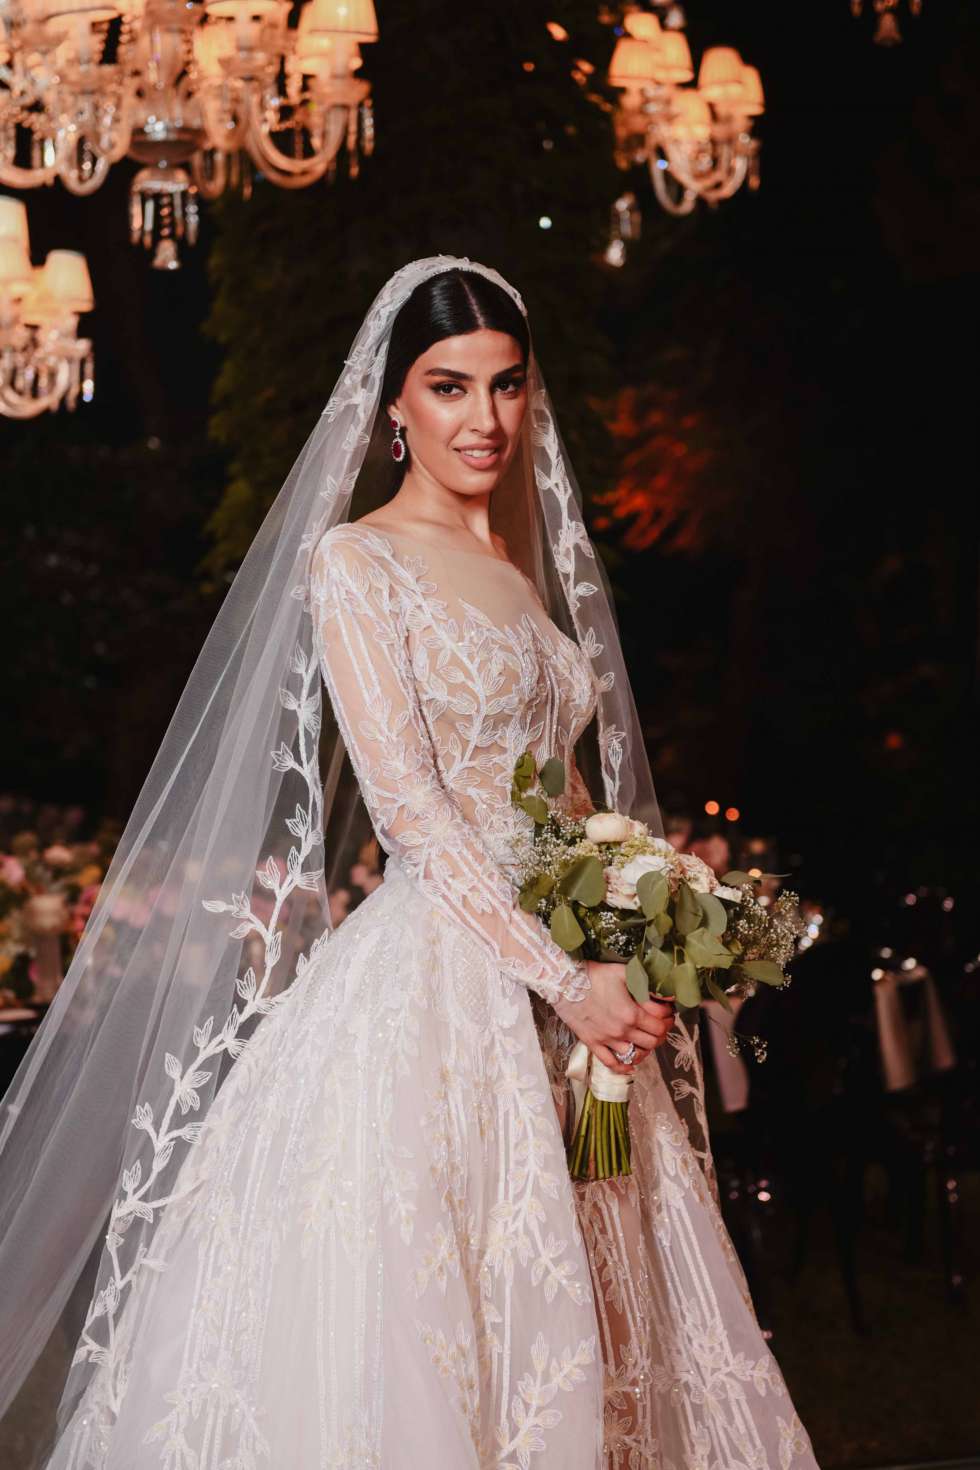 Nature Embraces Royalty Wedding | Arabia Weddings